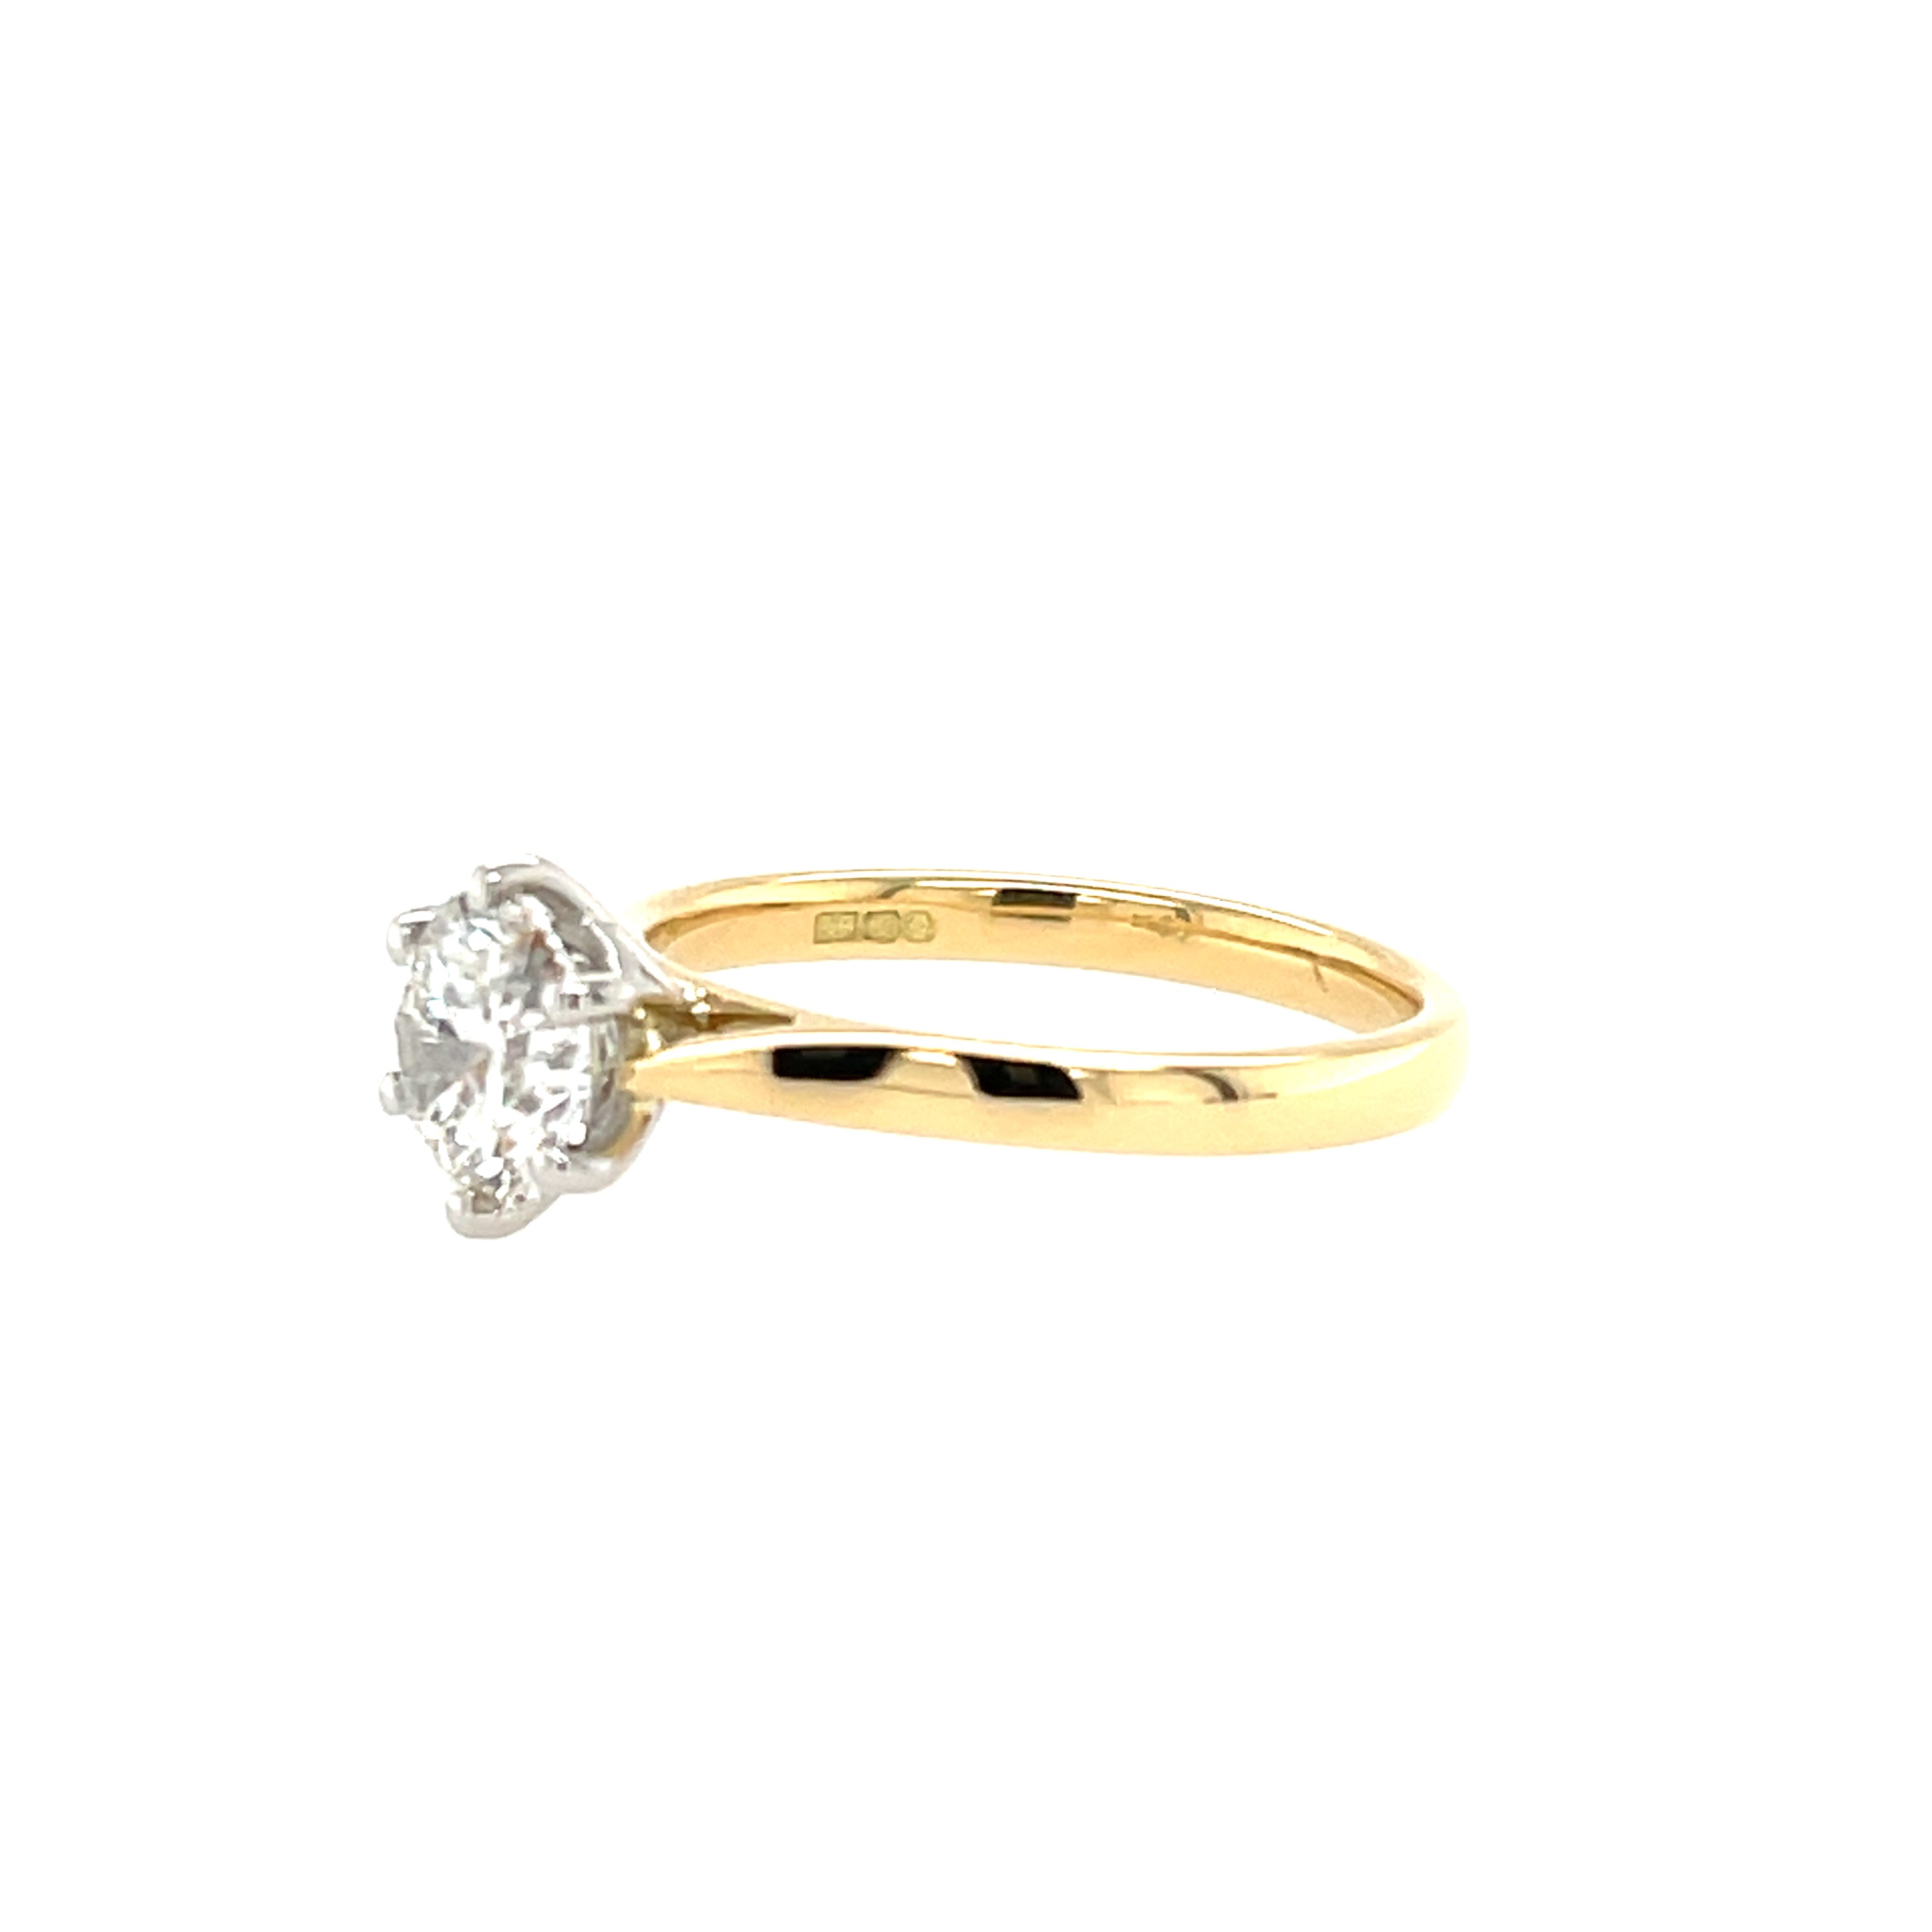 18ct Yellow Gold 1.25ct Round Brilliant Cut Diamond Solitaire Ring